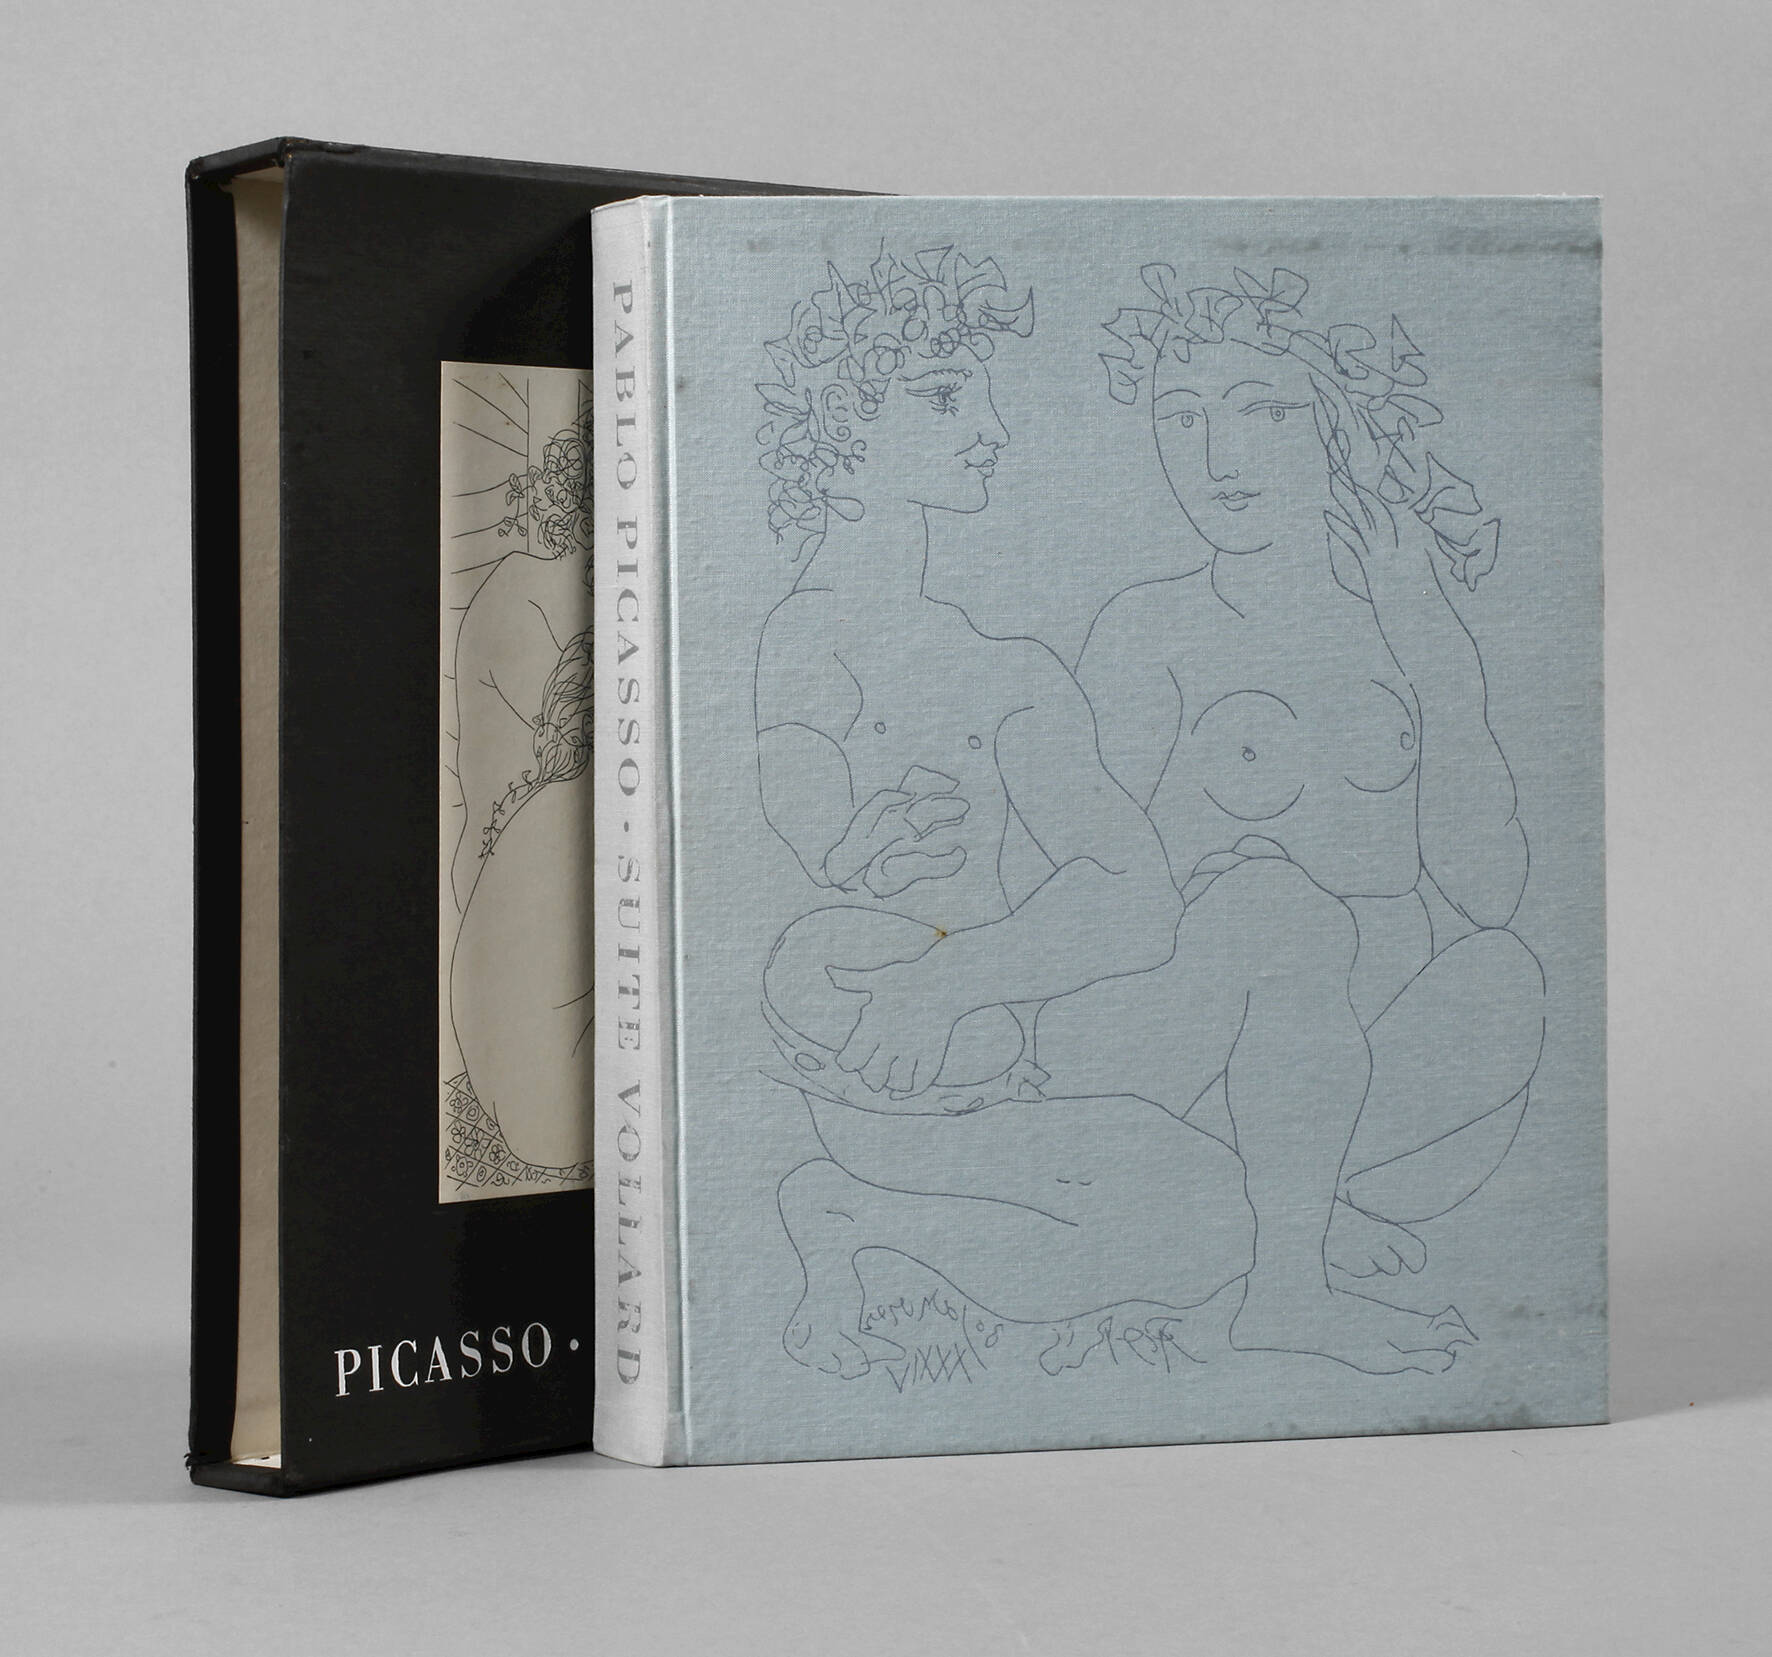 Pablo Picasso – Suite Vollard